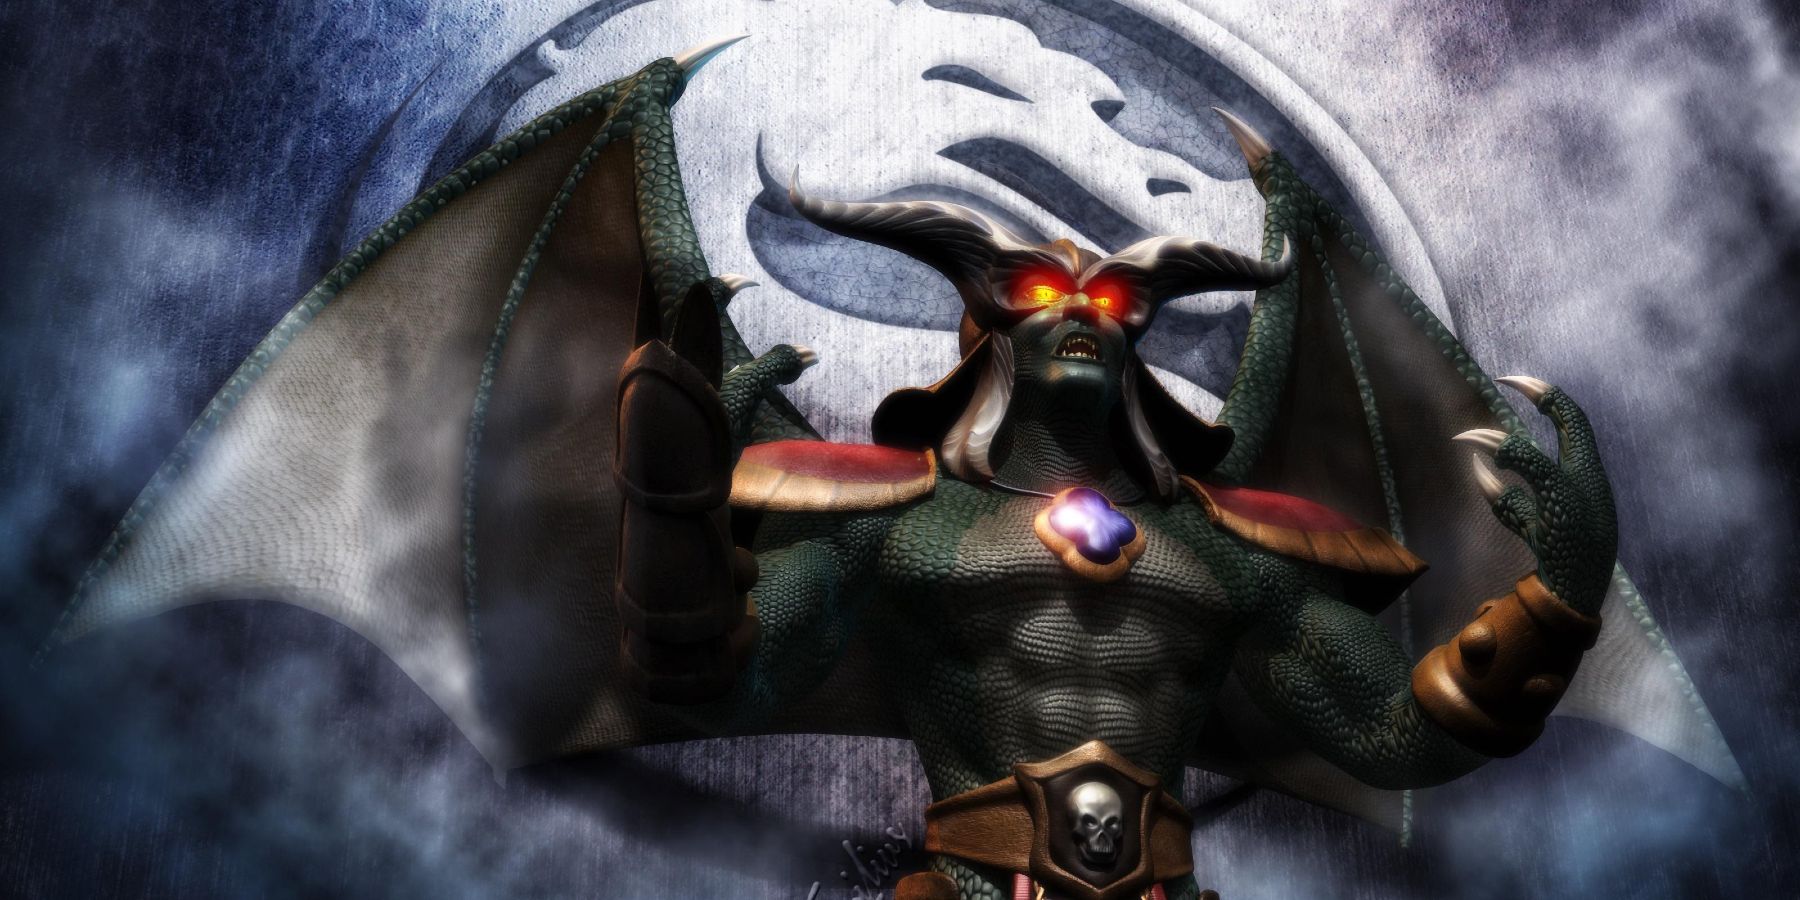 Emperor Onaga Of Outworld strikes a battle pose in Mortal Kombat Deception